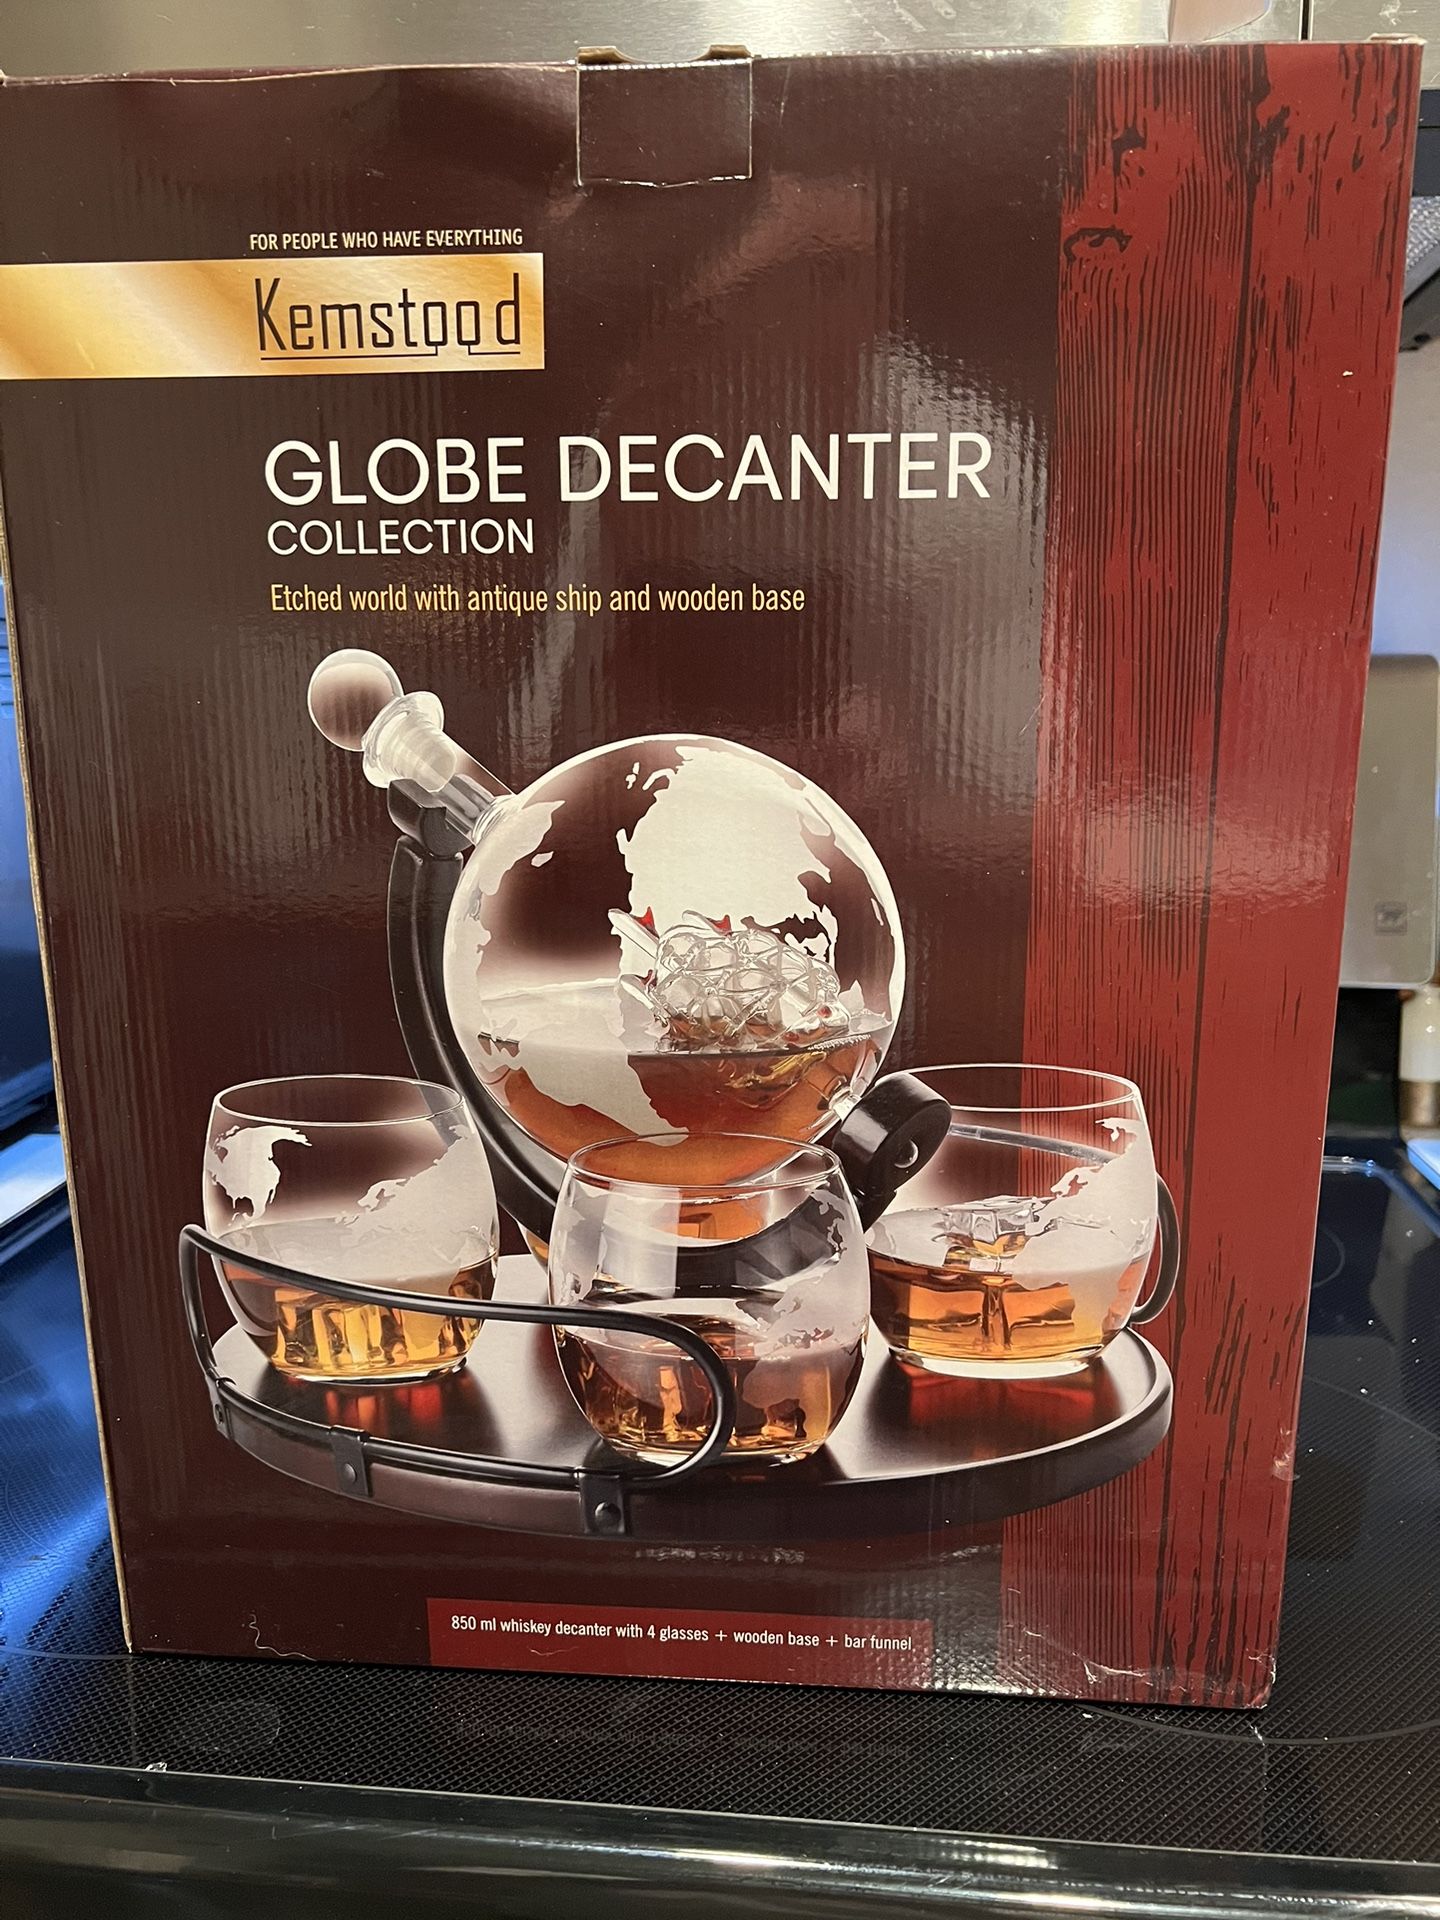 Kemstood Globe Decanter Collection